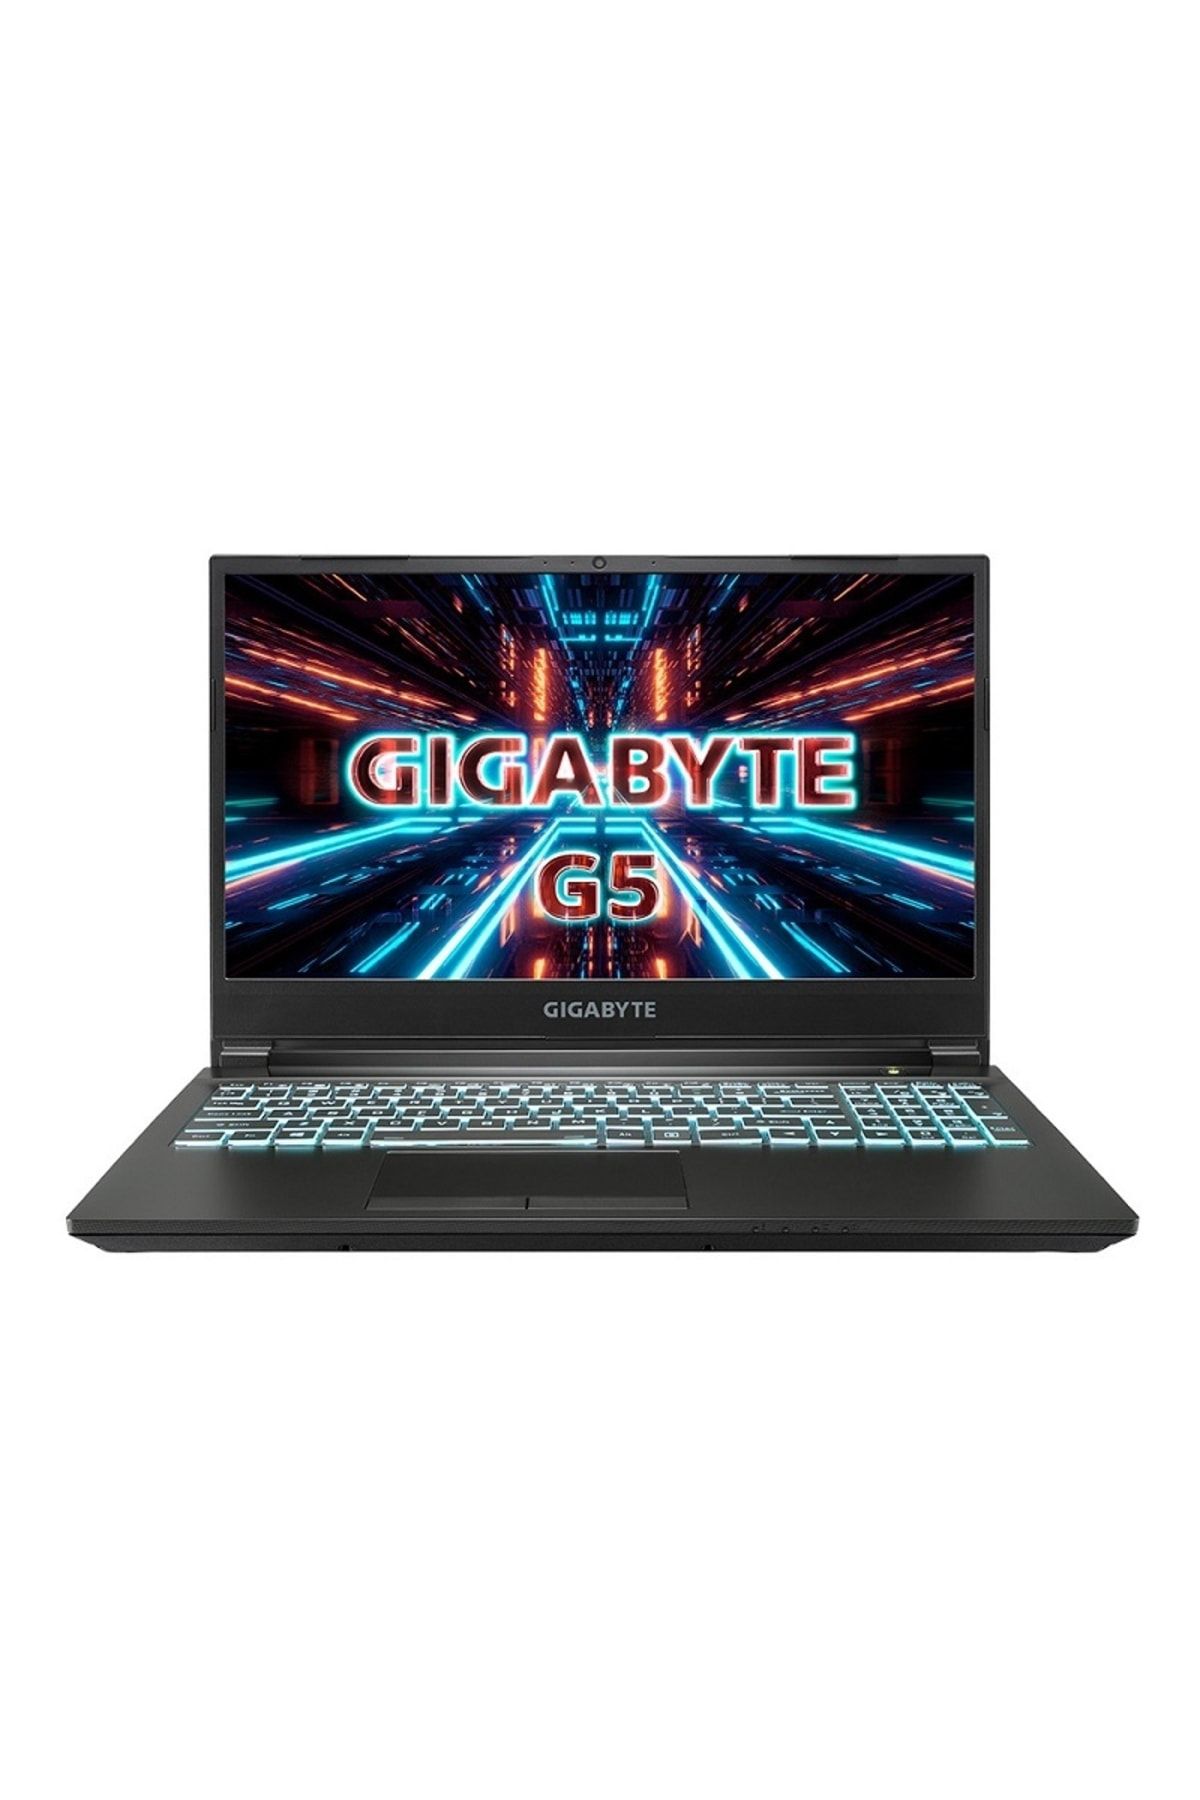 Gigabyte G5 Ge-51ee213sd I5-12500h 16gb 512gb Ssd Rtx3050 4gb 15.6 Fhd 144hz Freedos Gaming Notebook